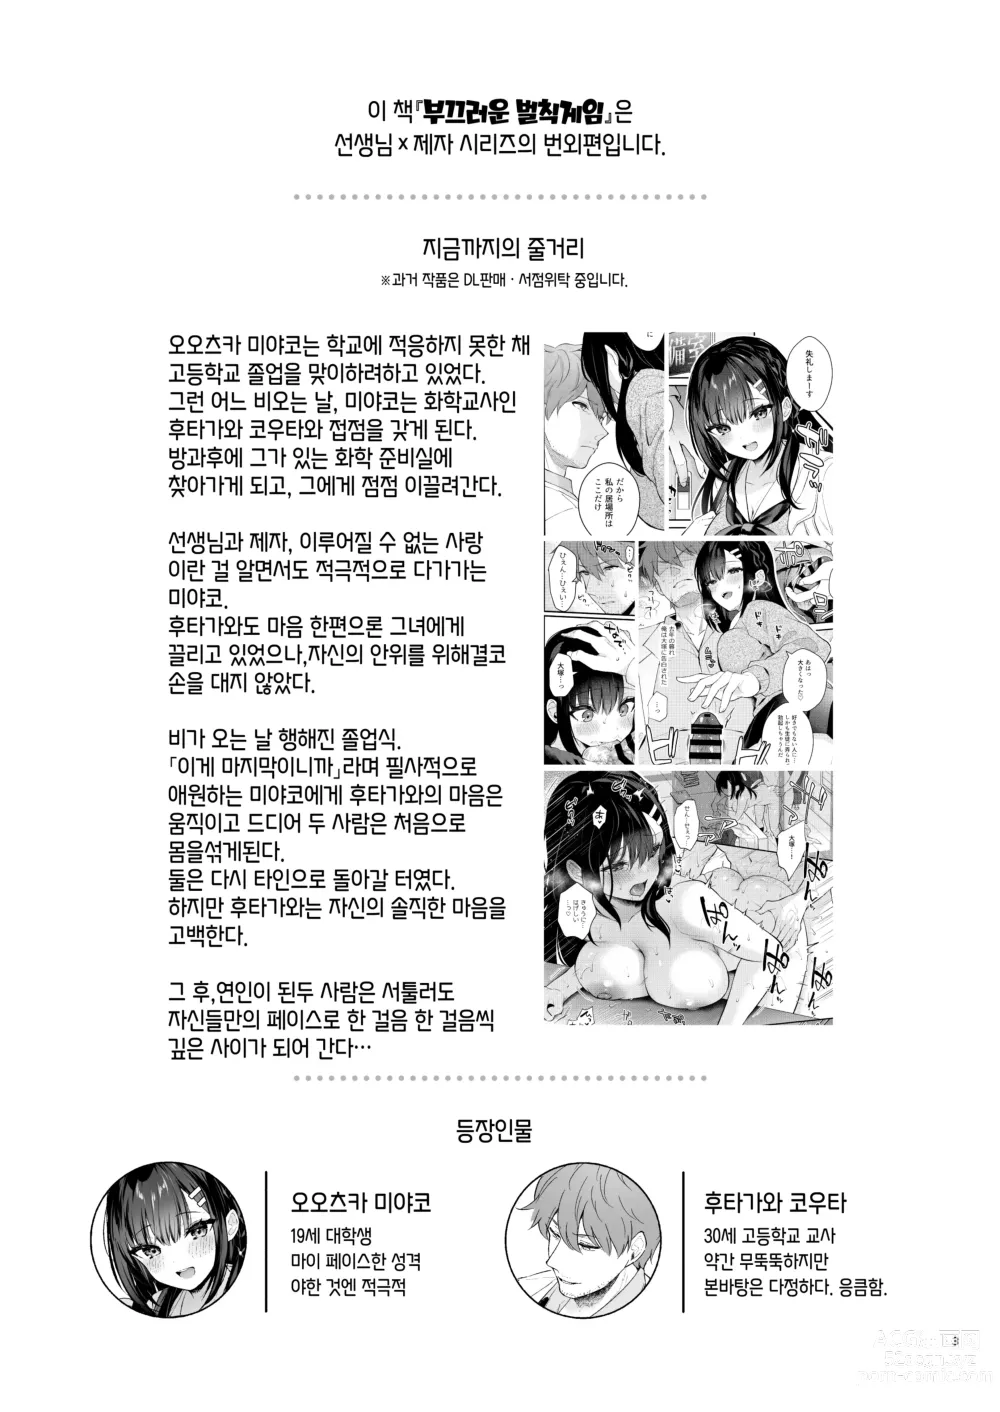 Page 3 of doujinshi 부끄러운 벌칙게임